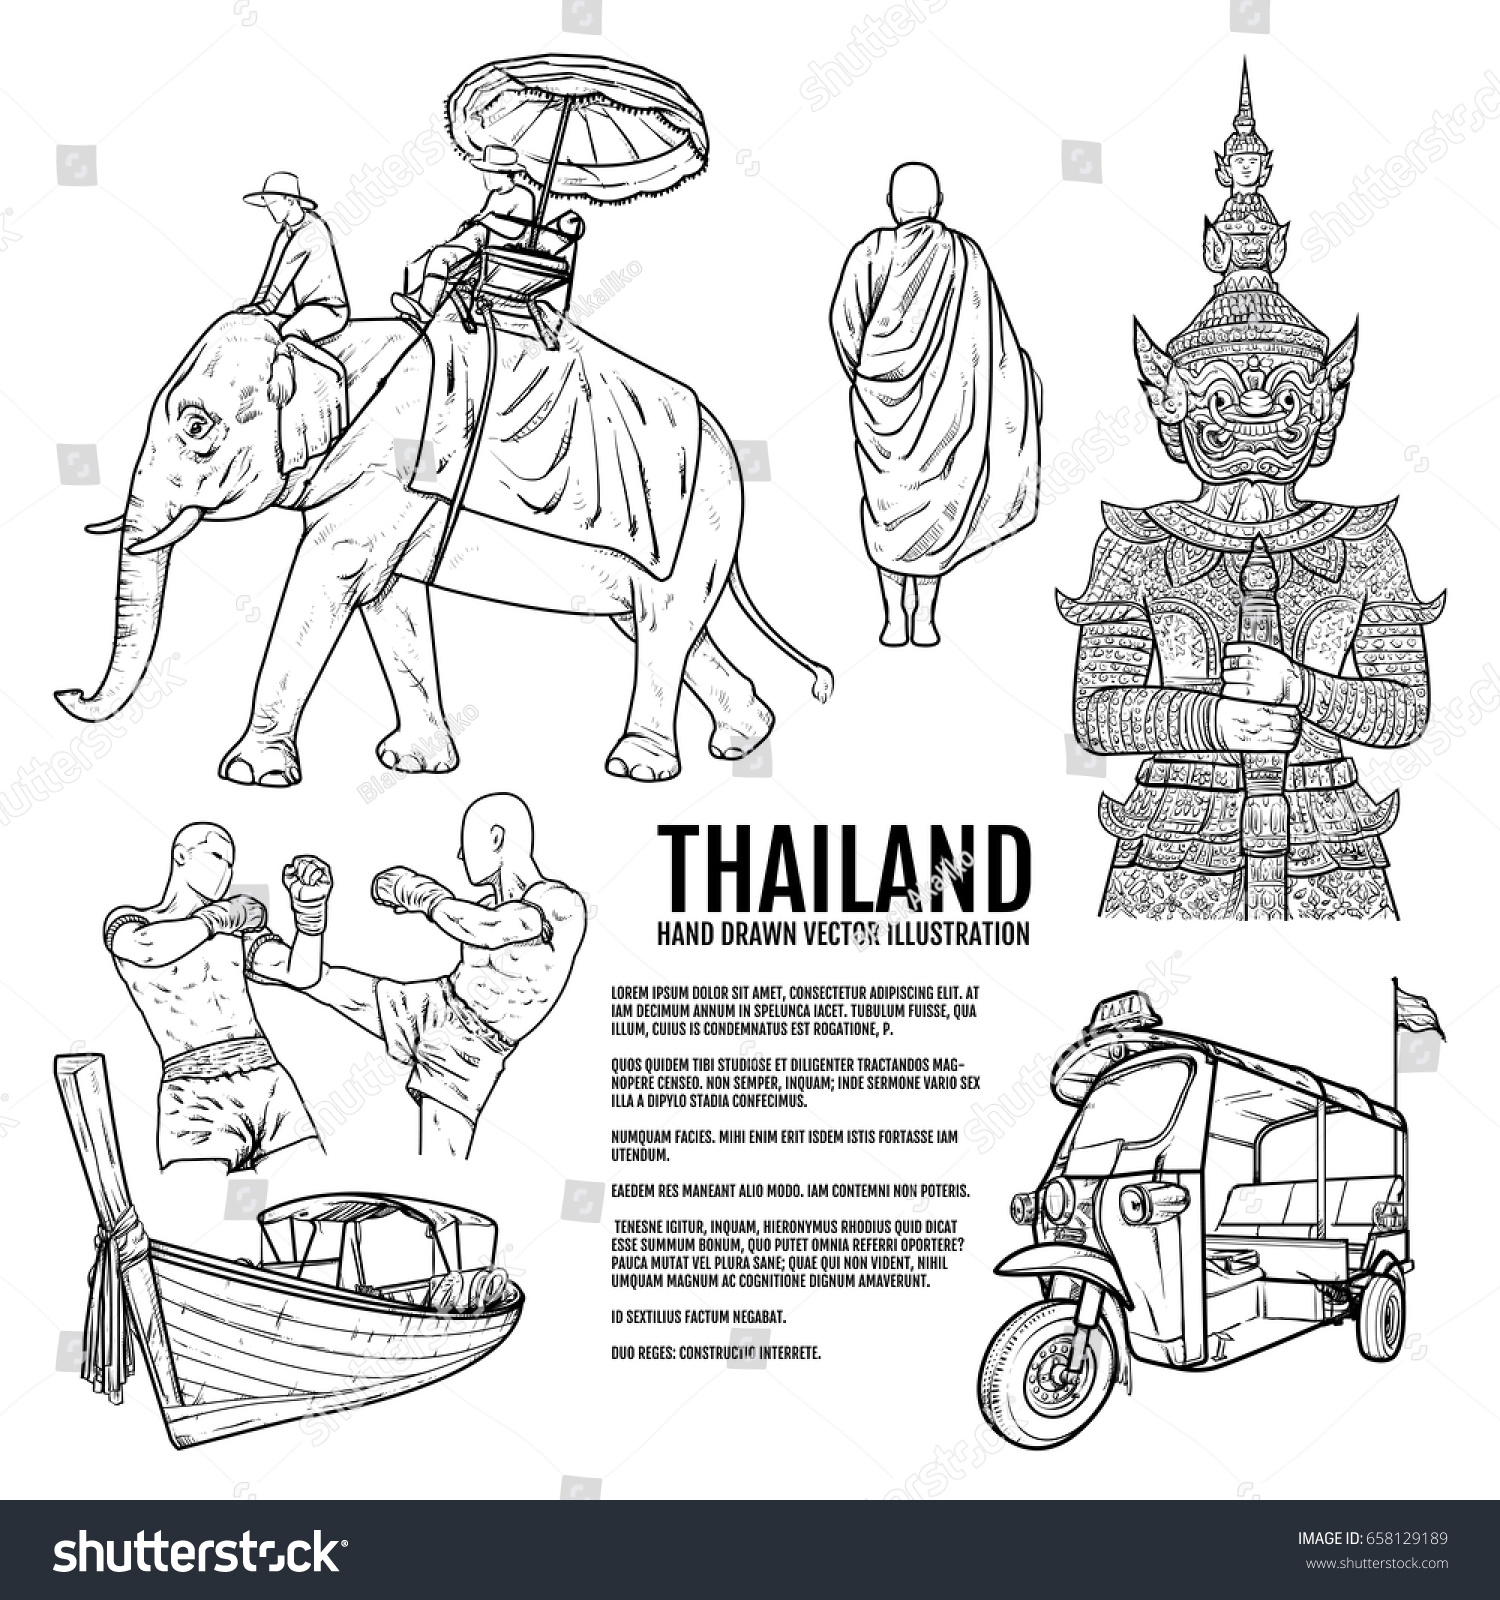 Тайланд рисунок для детей